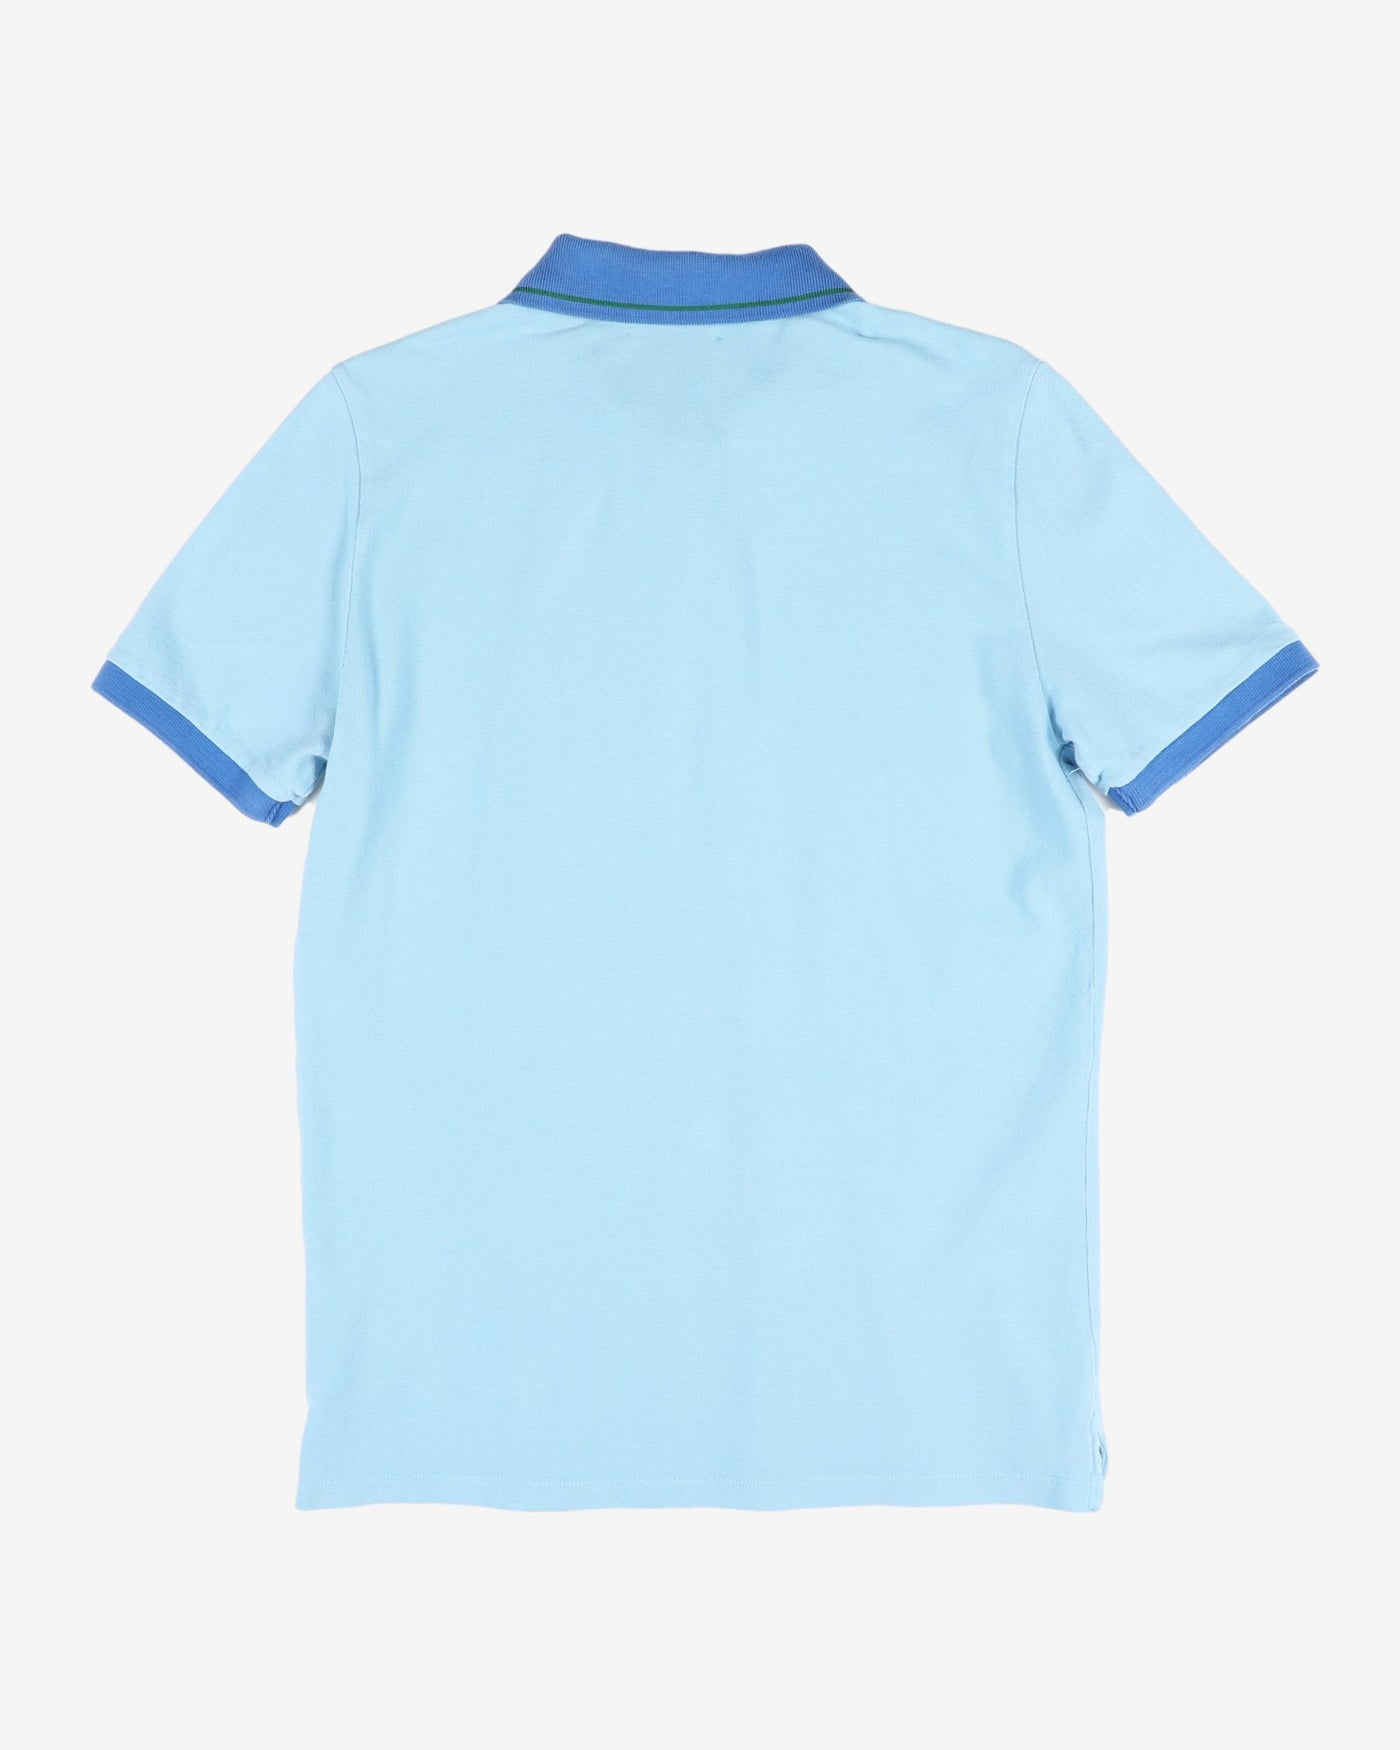 Burberry London Blue Polo Shirt - XL